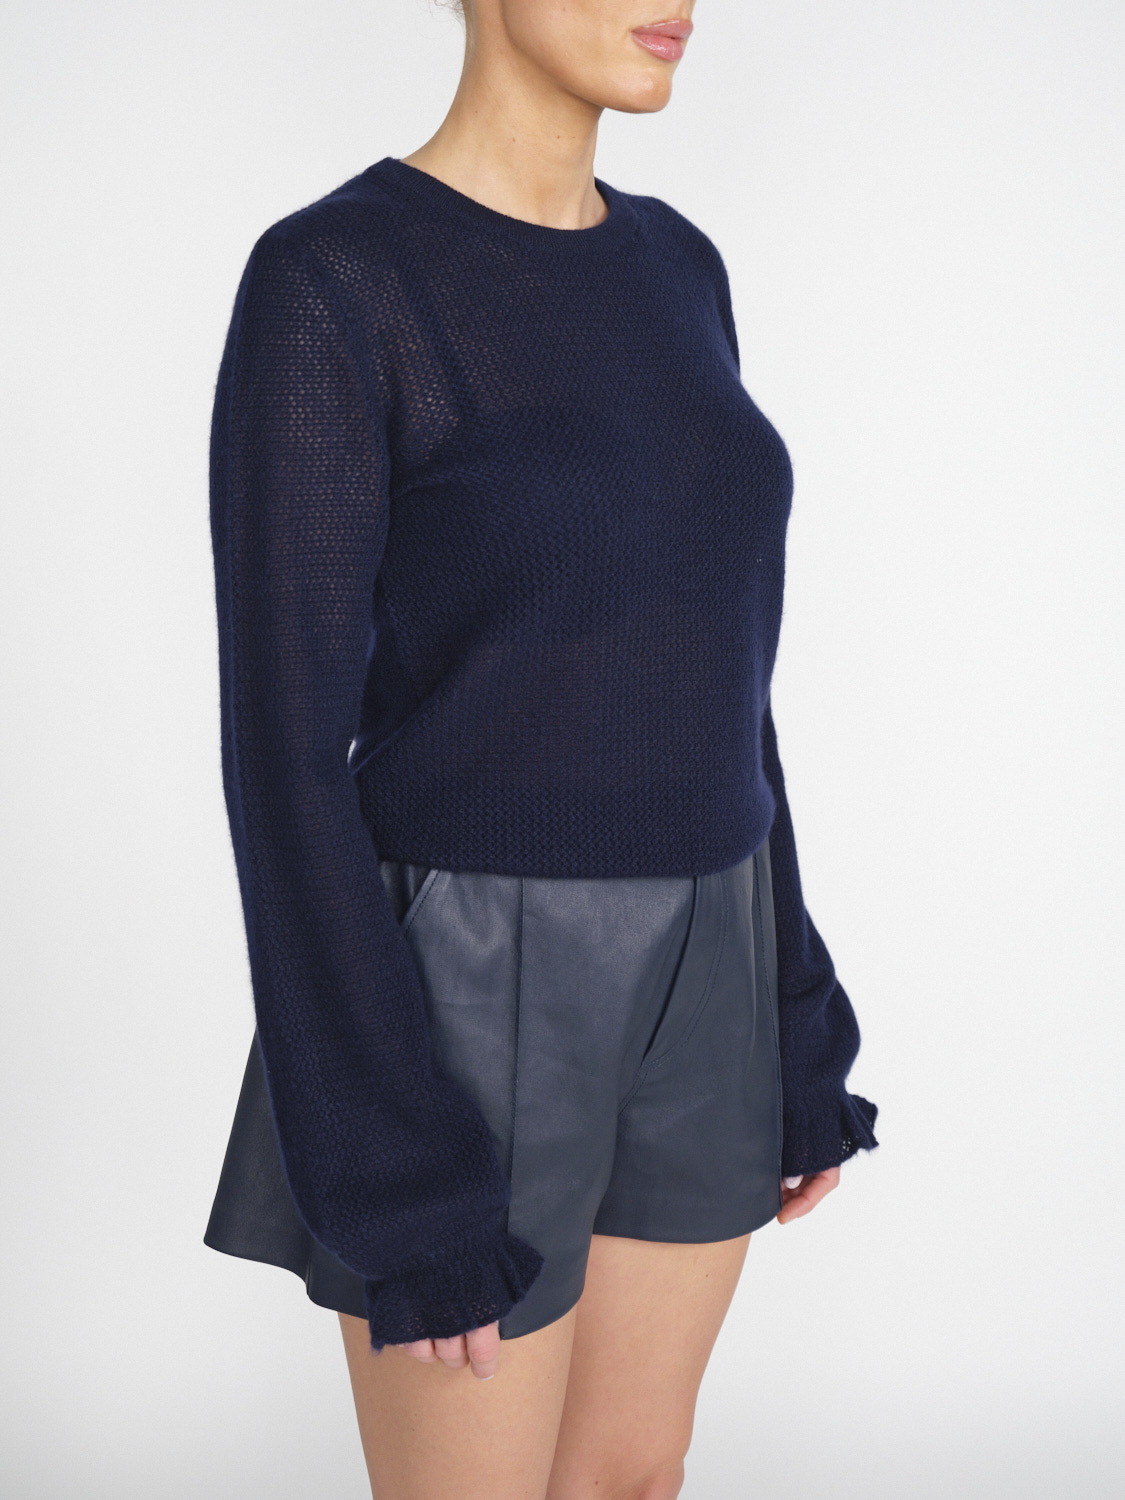 Lisa Yang Leanne - Ajour knit cashmere jumper  marine XS/S